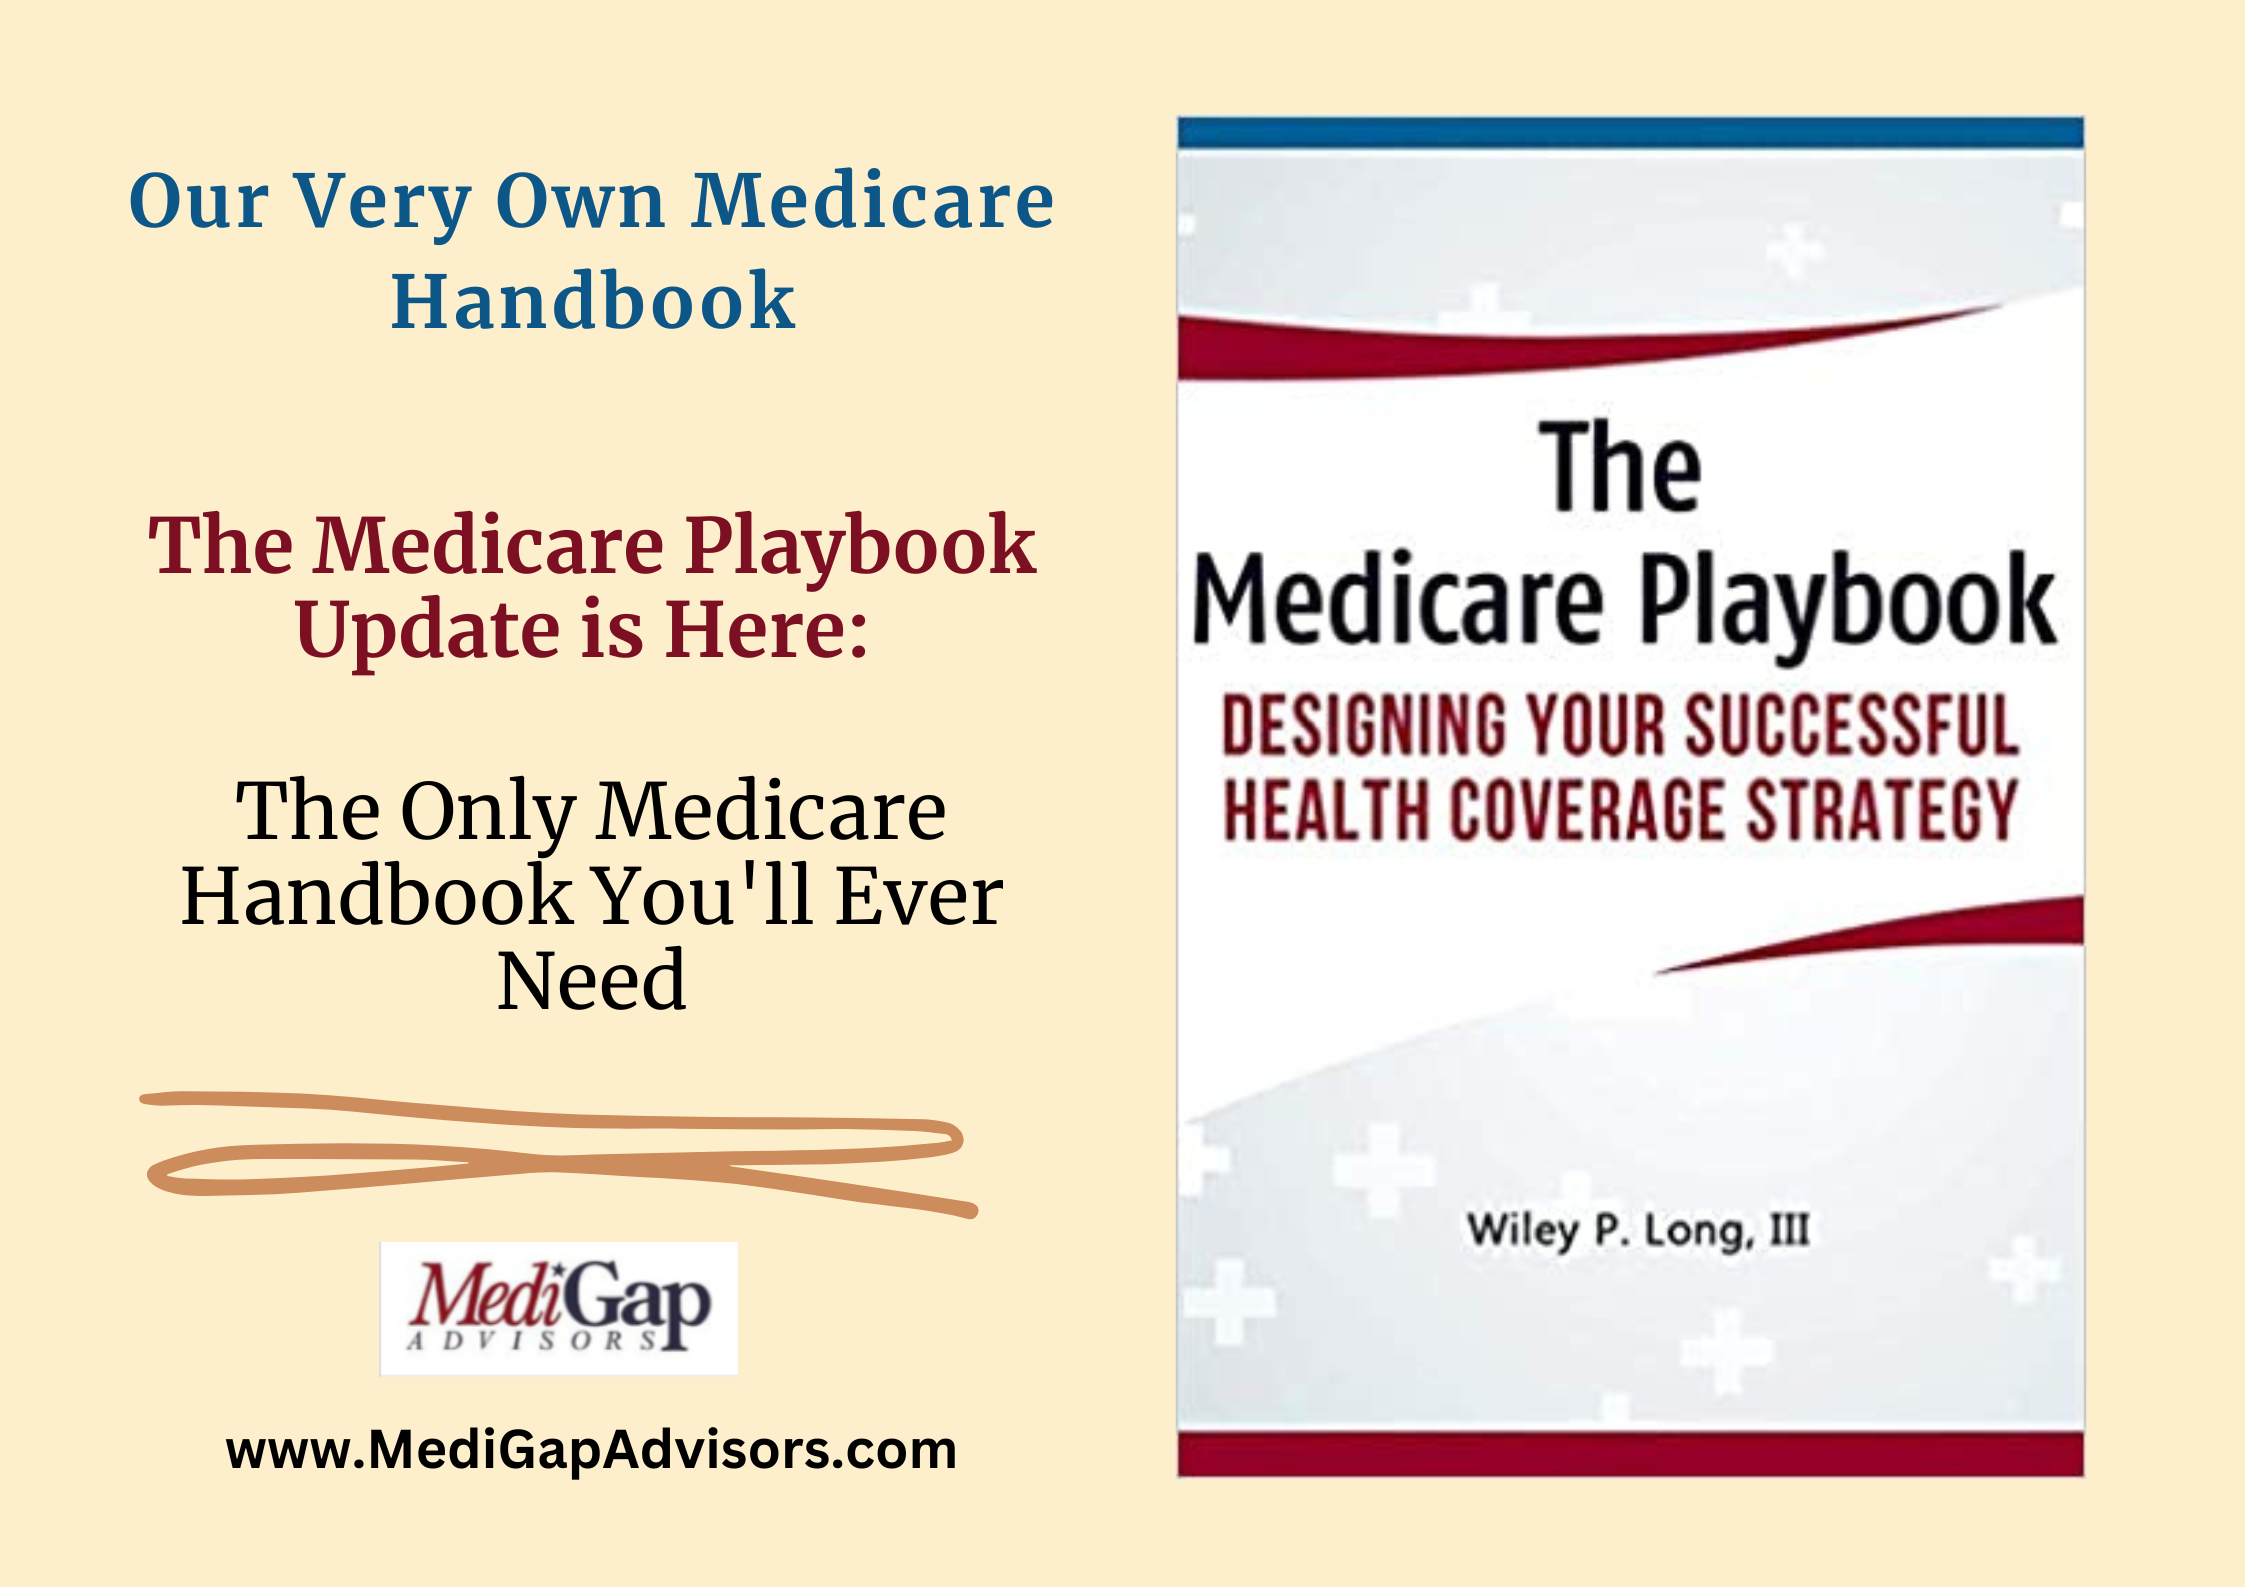 The Medicare Playbook Medicare Handbook Update